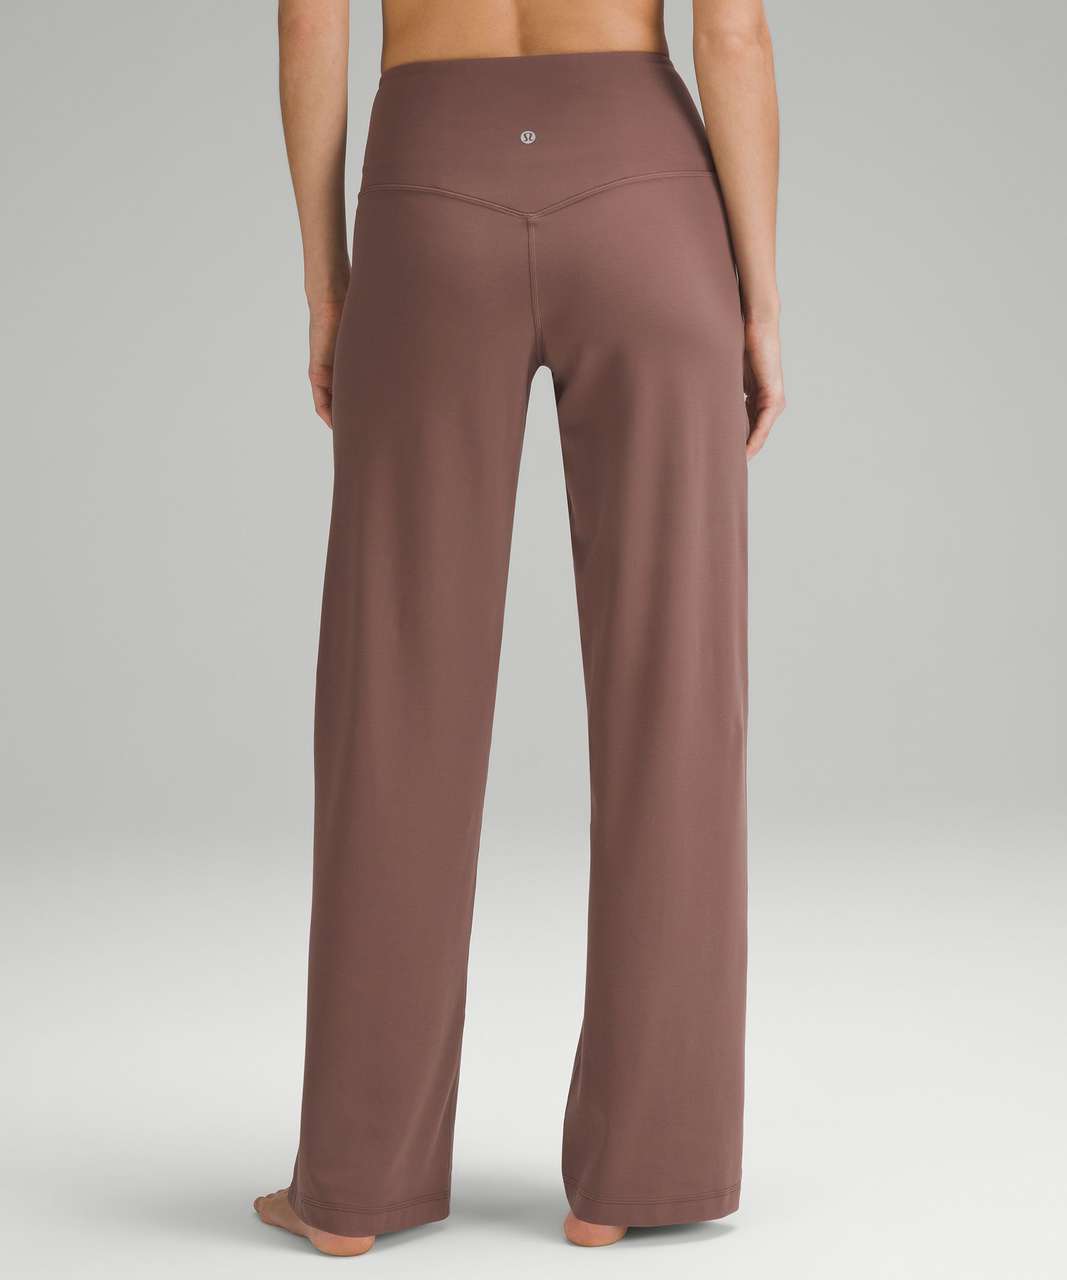 Lululemon Align High-rise Wide-leg Pant 31 Retail, - Lululemon clothing